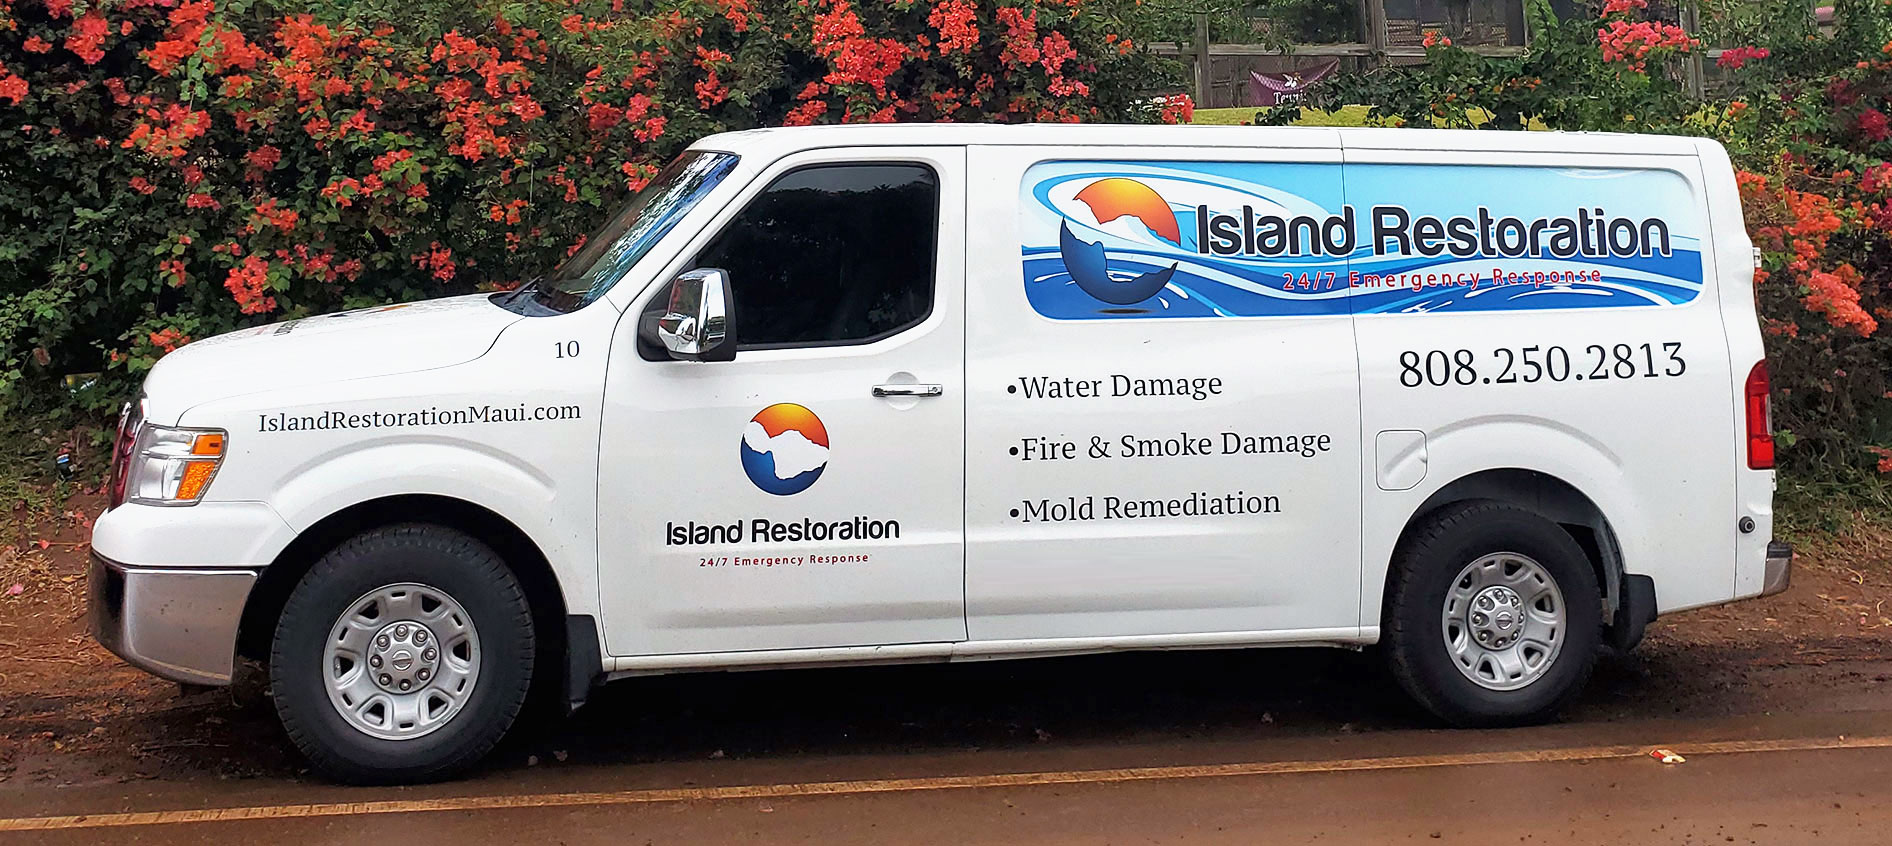 Island Restoration Van